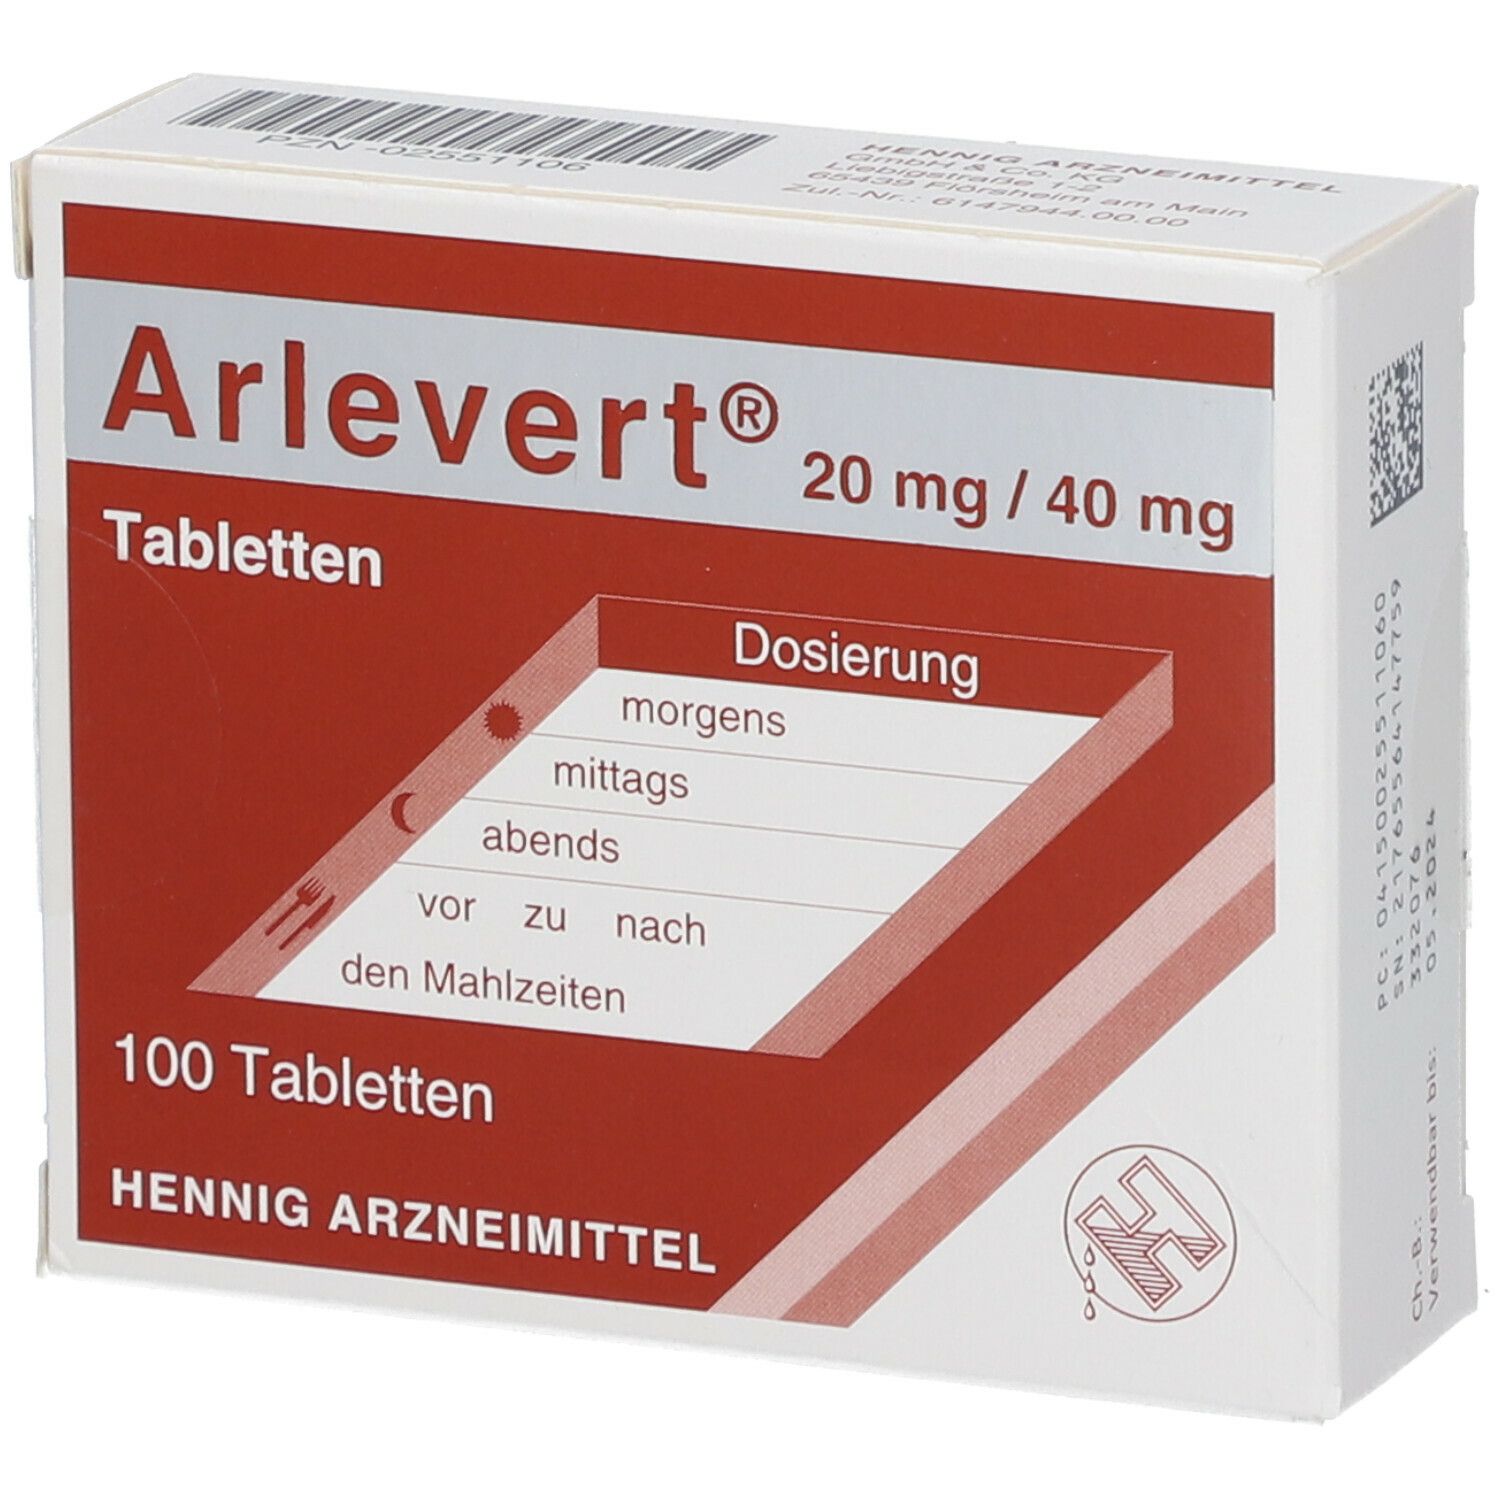 Arlevert® 20 mg/40 mg